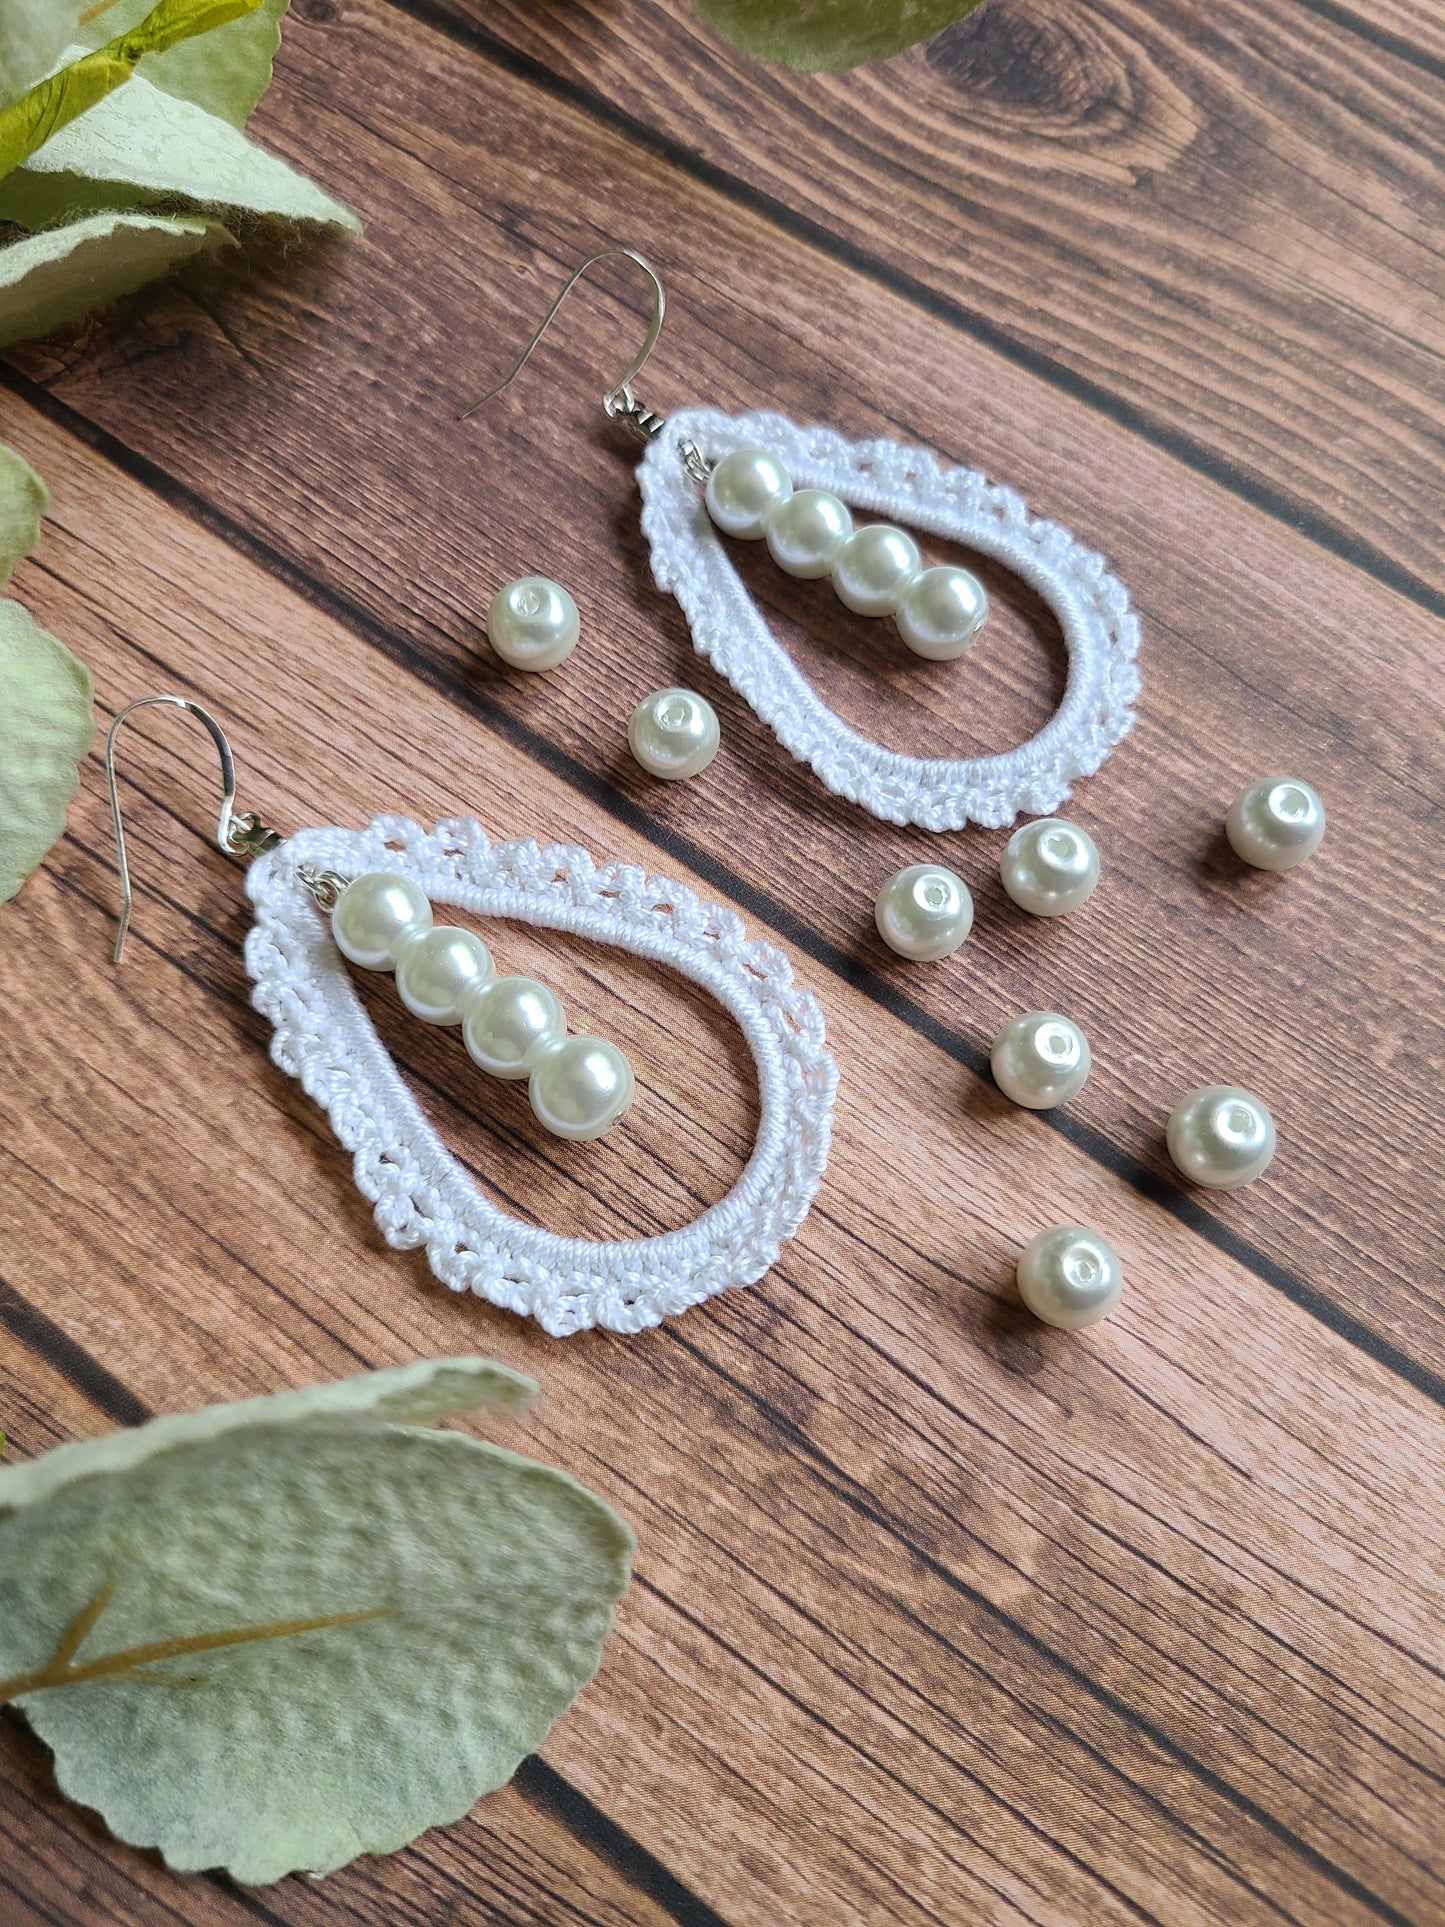 Handmade crochet earrings with pearls